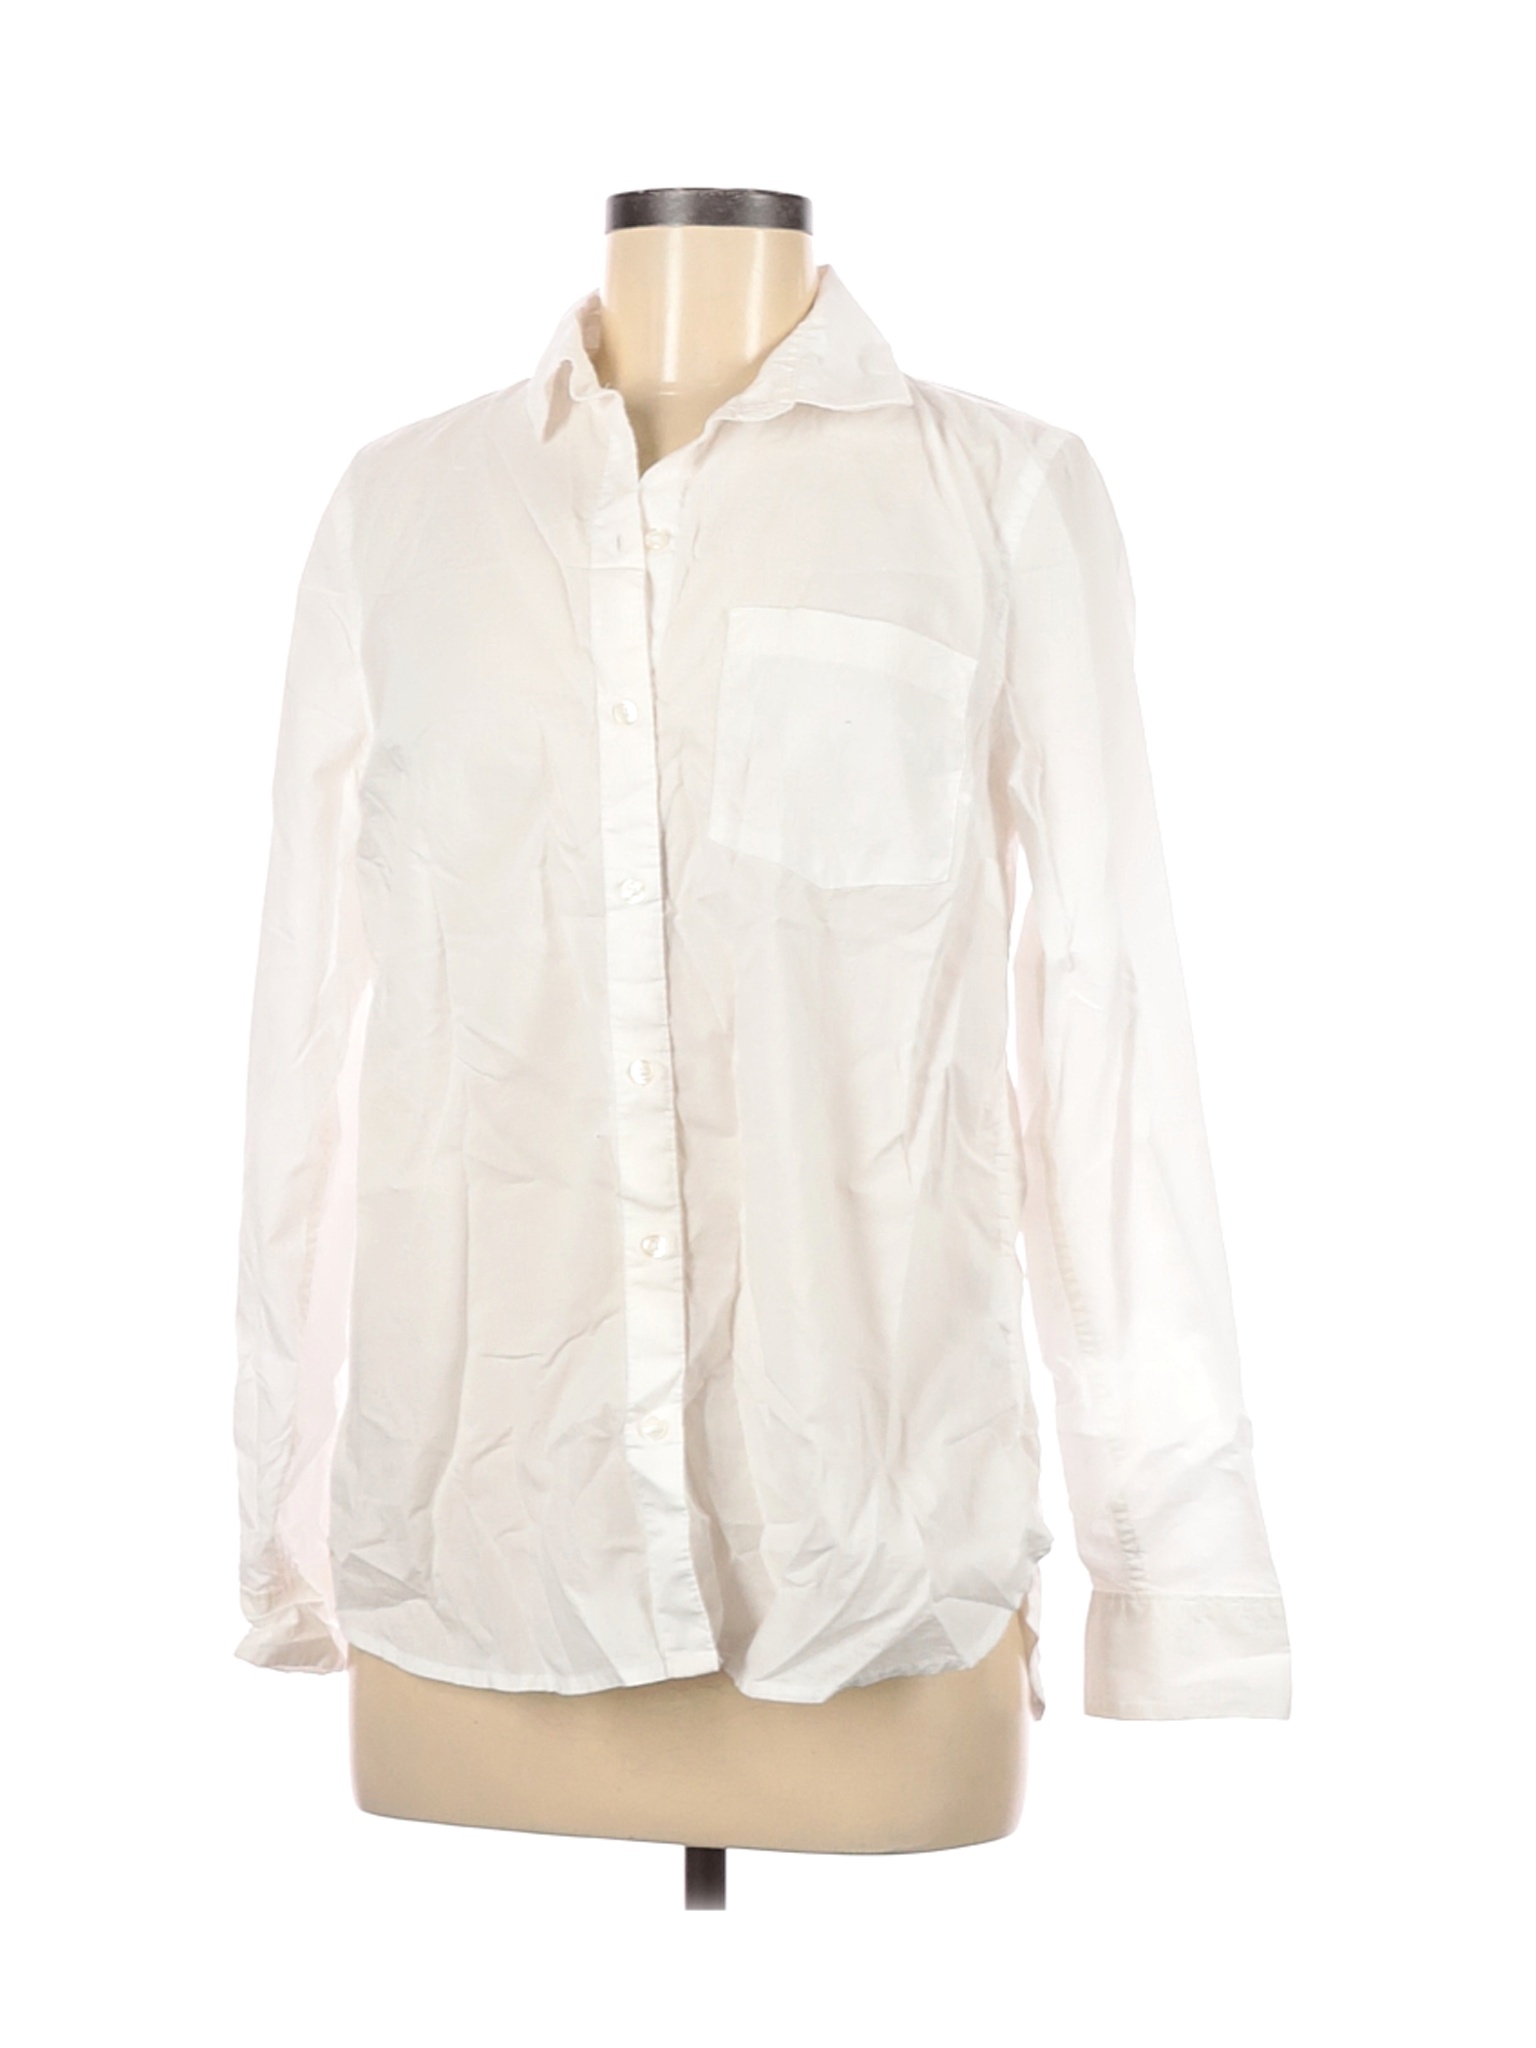 Old Navy Women White Long Sleeve Button-Down Shirt M | eBay